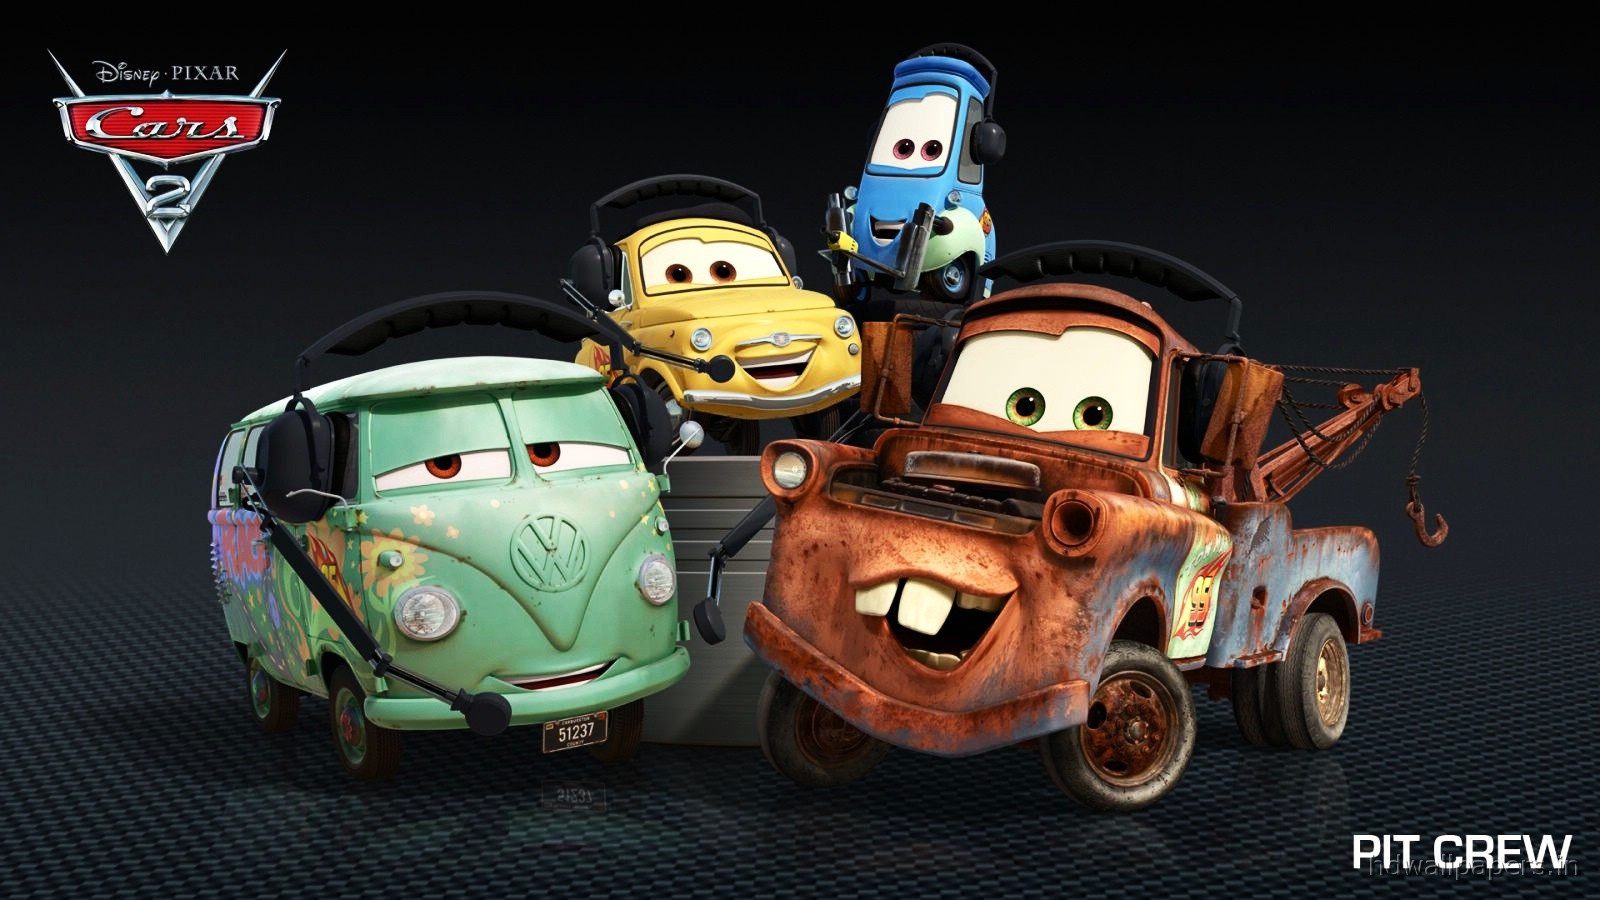  Pixars Cars 2 HD Wallpapers Best High Quality Car Desktop Wallpapers 1600x900